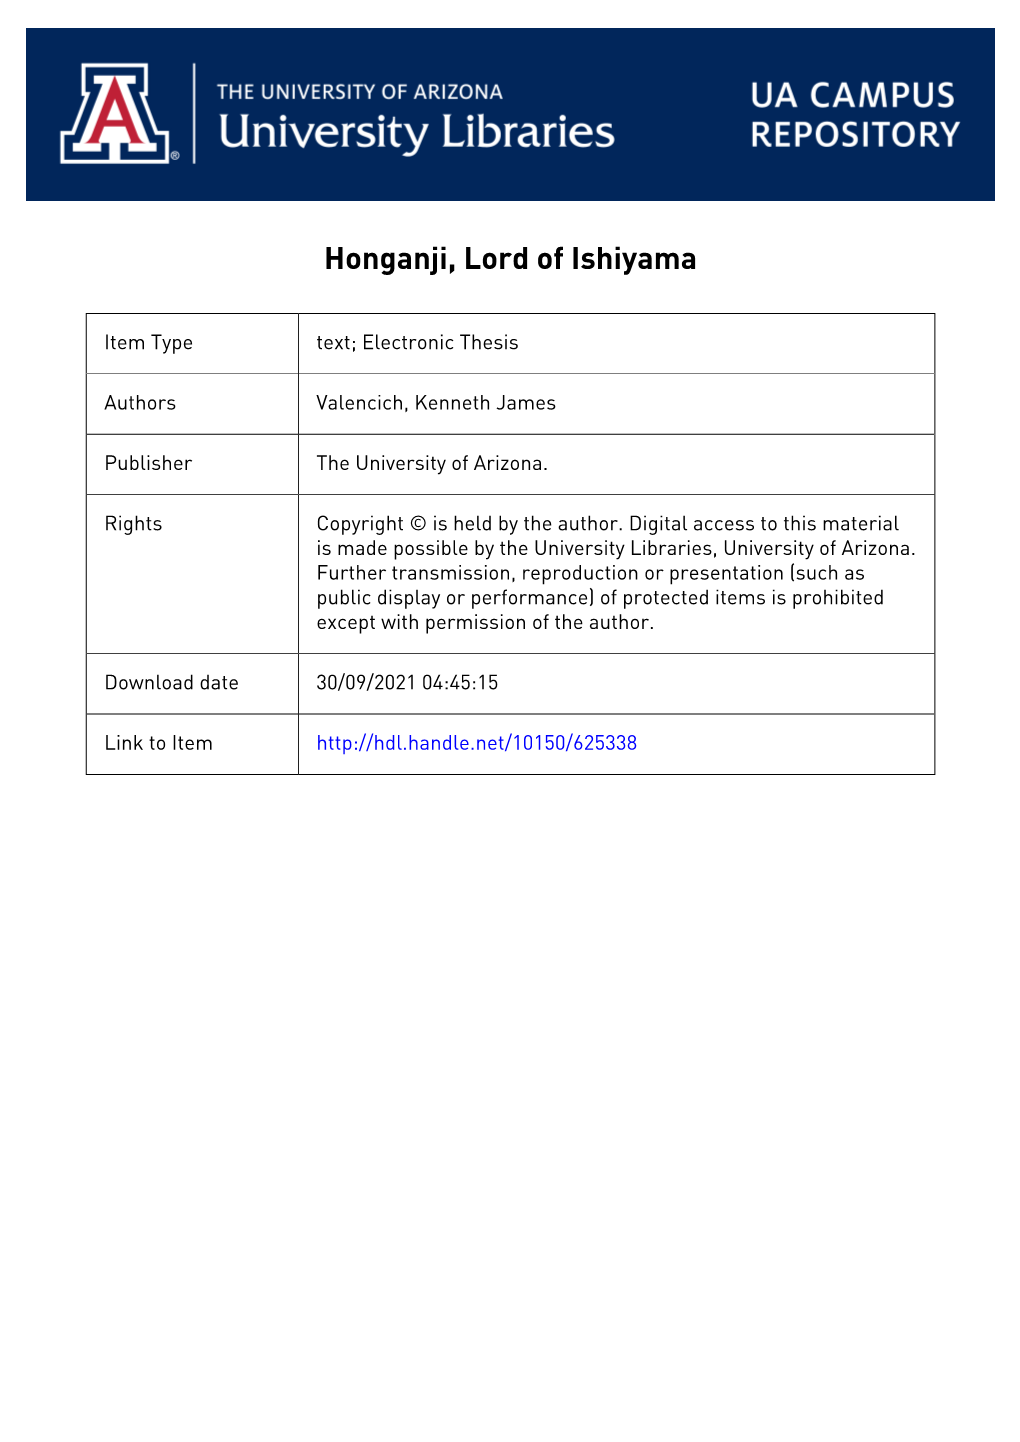 HONGANJI, LORD of ISHIYAMA by Kenneth Valencich Copyright